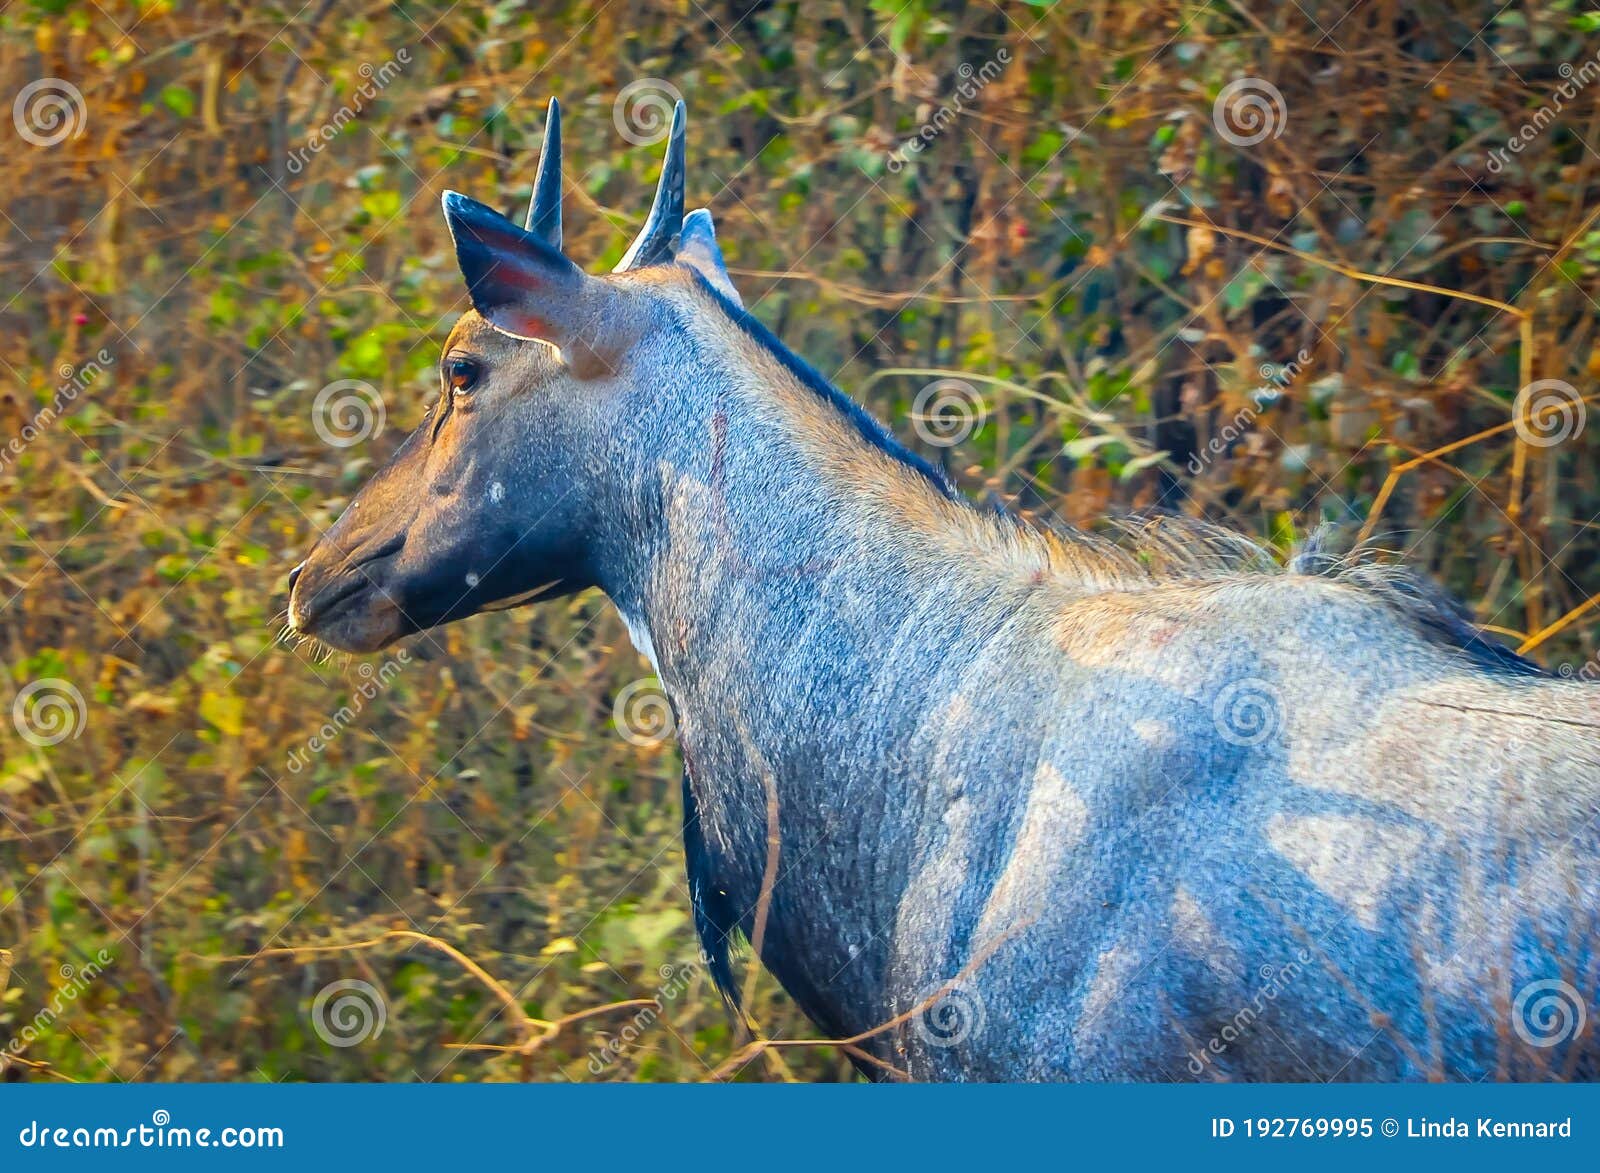 Close Up of a Nilgai or Blue Bull, Boselaphus Tragocamelus, in a Natural  Habitat, Ranthambore National Park, India Stock Image - Image of outdoors,  fauna: 192769995